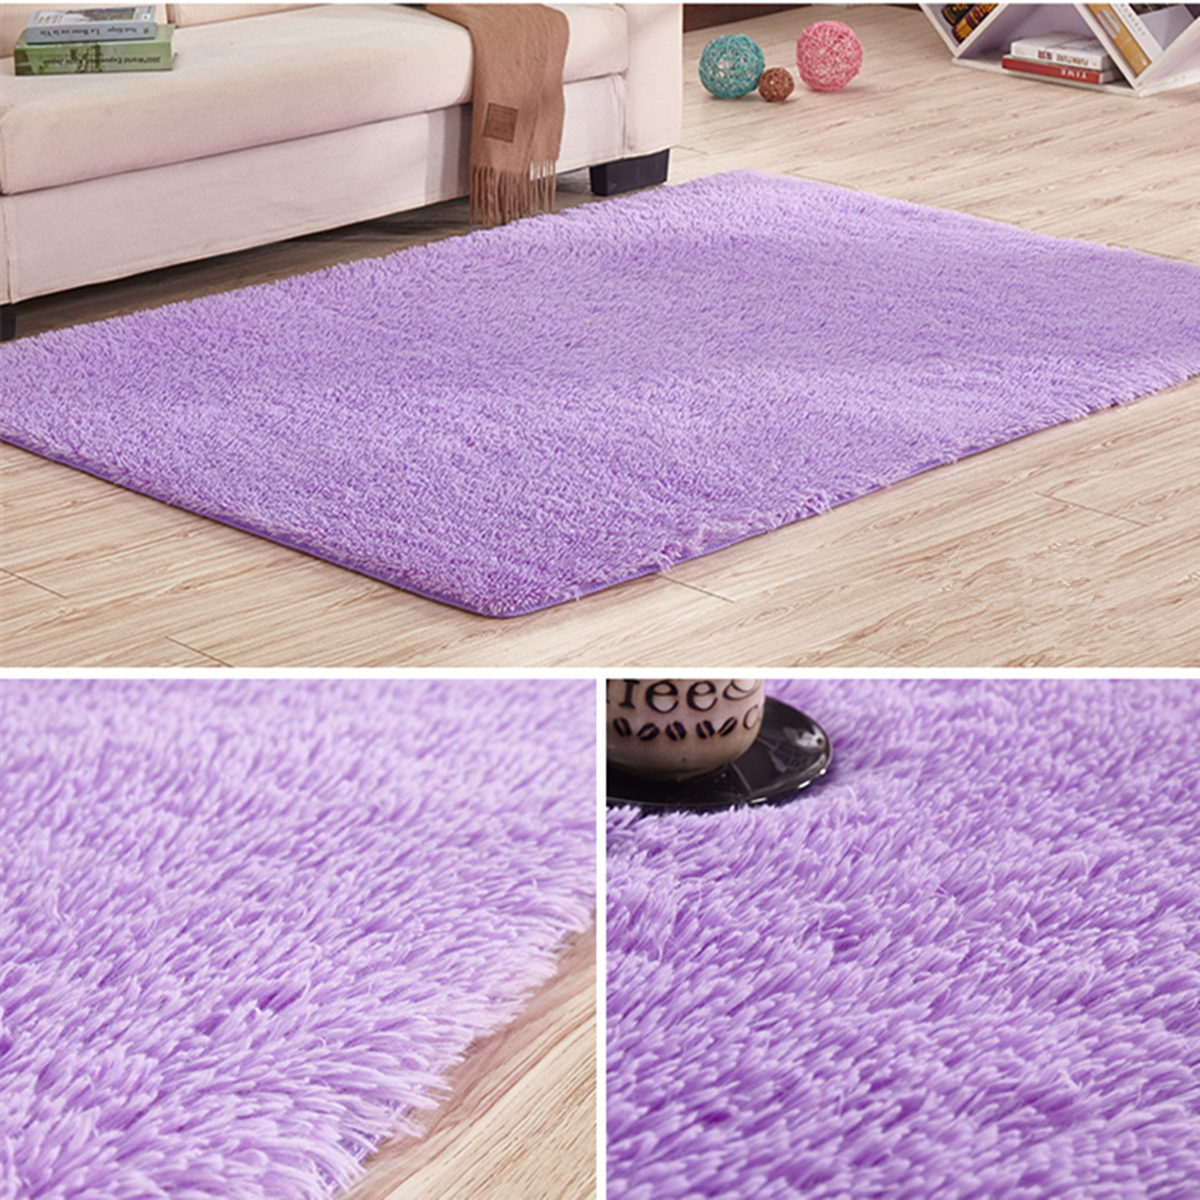 80cm-x-160cm-Purple-Soft-Fluffy-Anti-Skid-Shaggy-Area-Rug-Living-Room-Home-Carpet-Floor-Mat-1140518-3